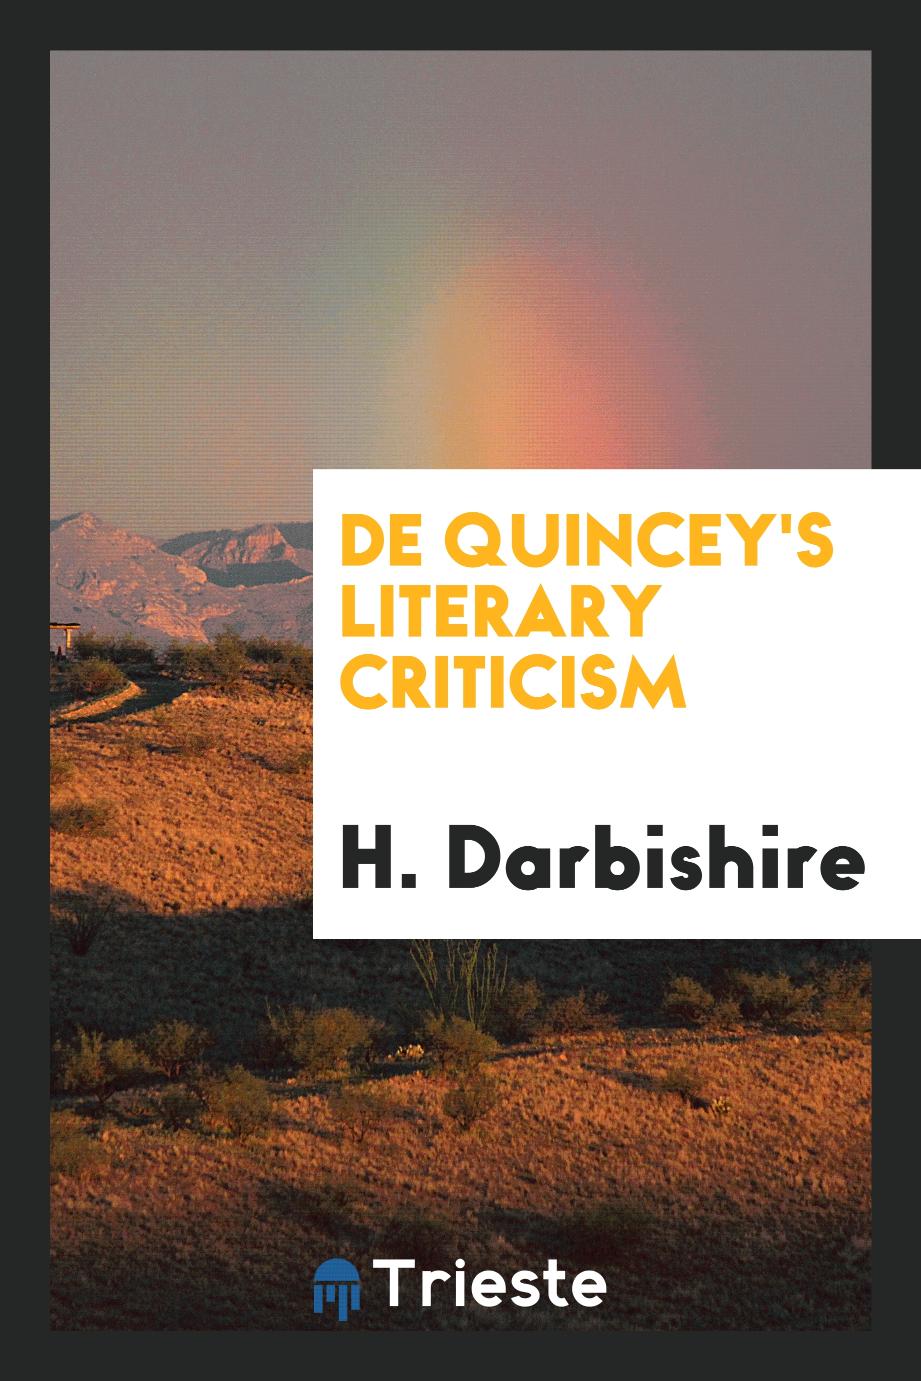 De Quincey's literary criticism